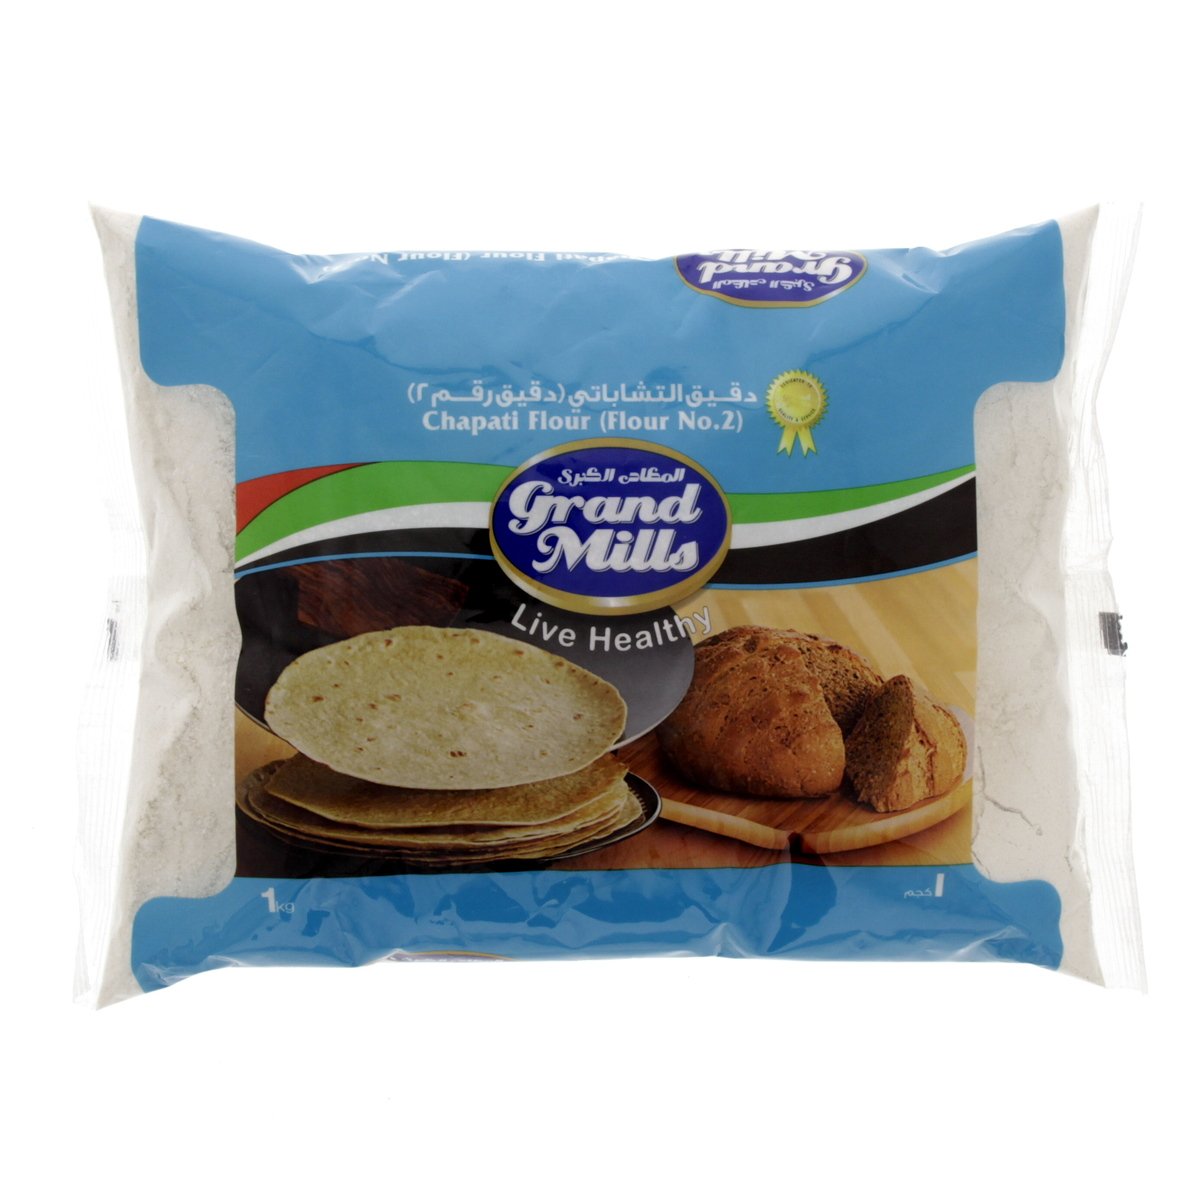 Grand Mills Chapati Flour No.2 1 kg